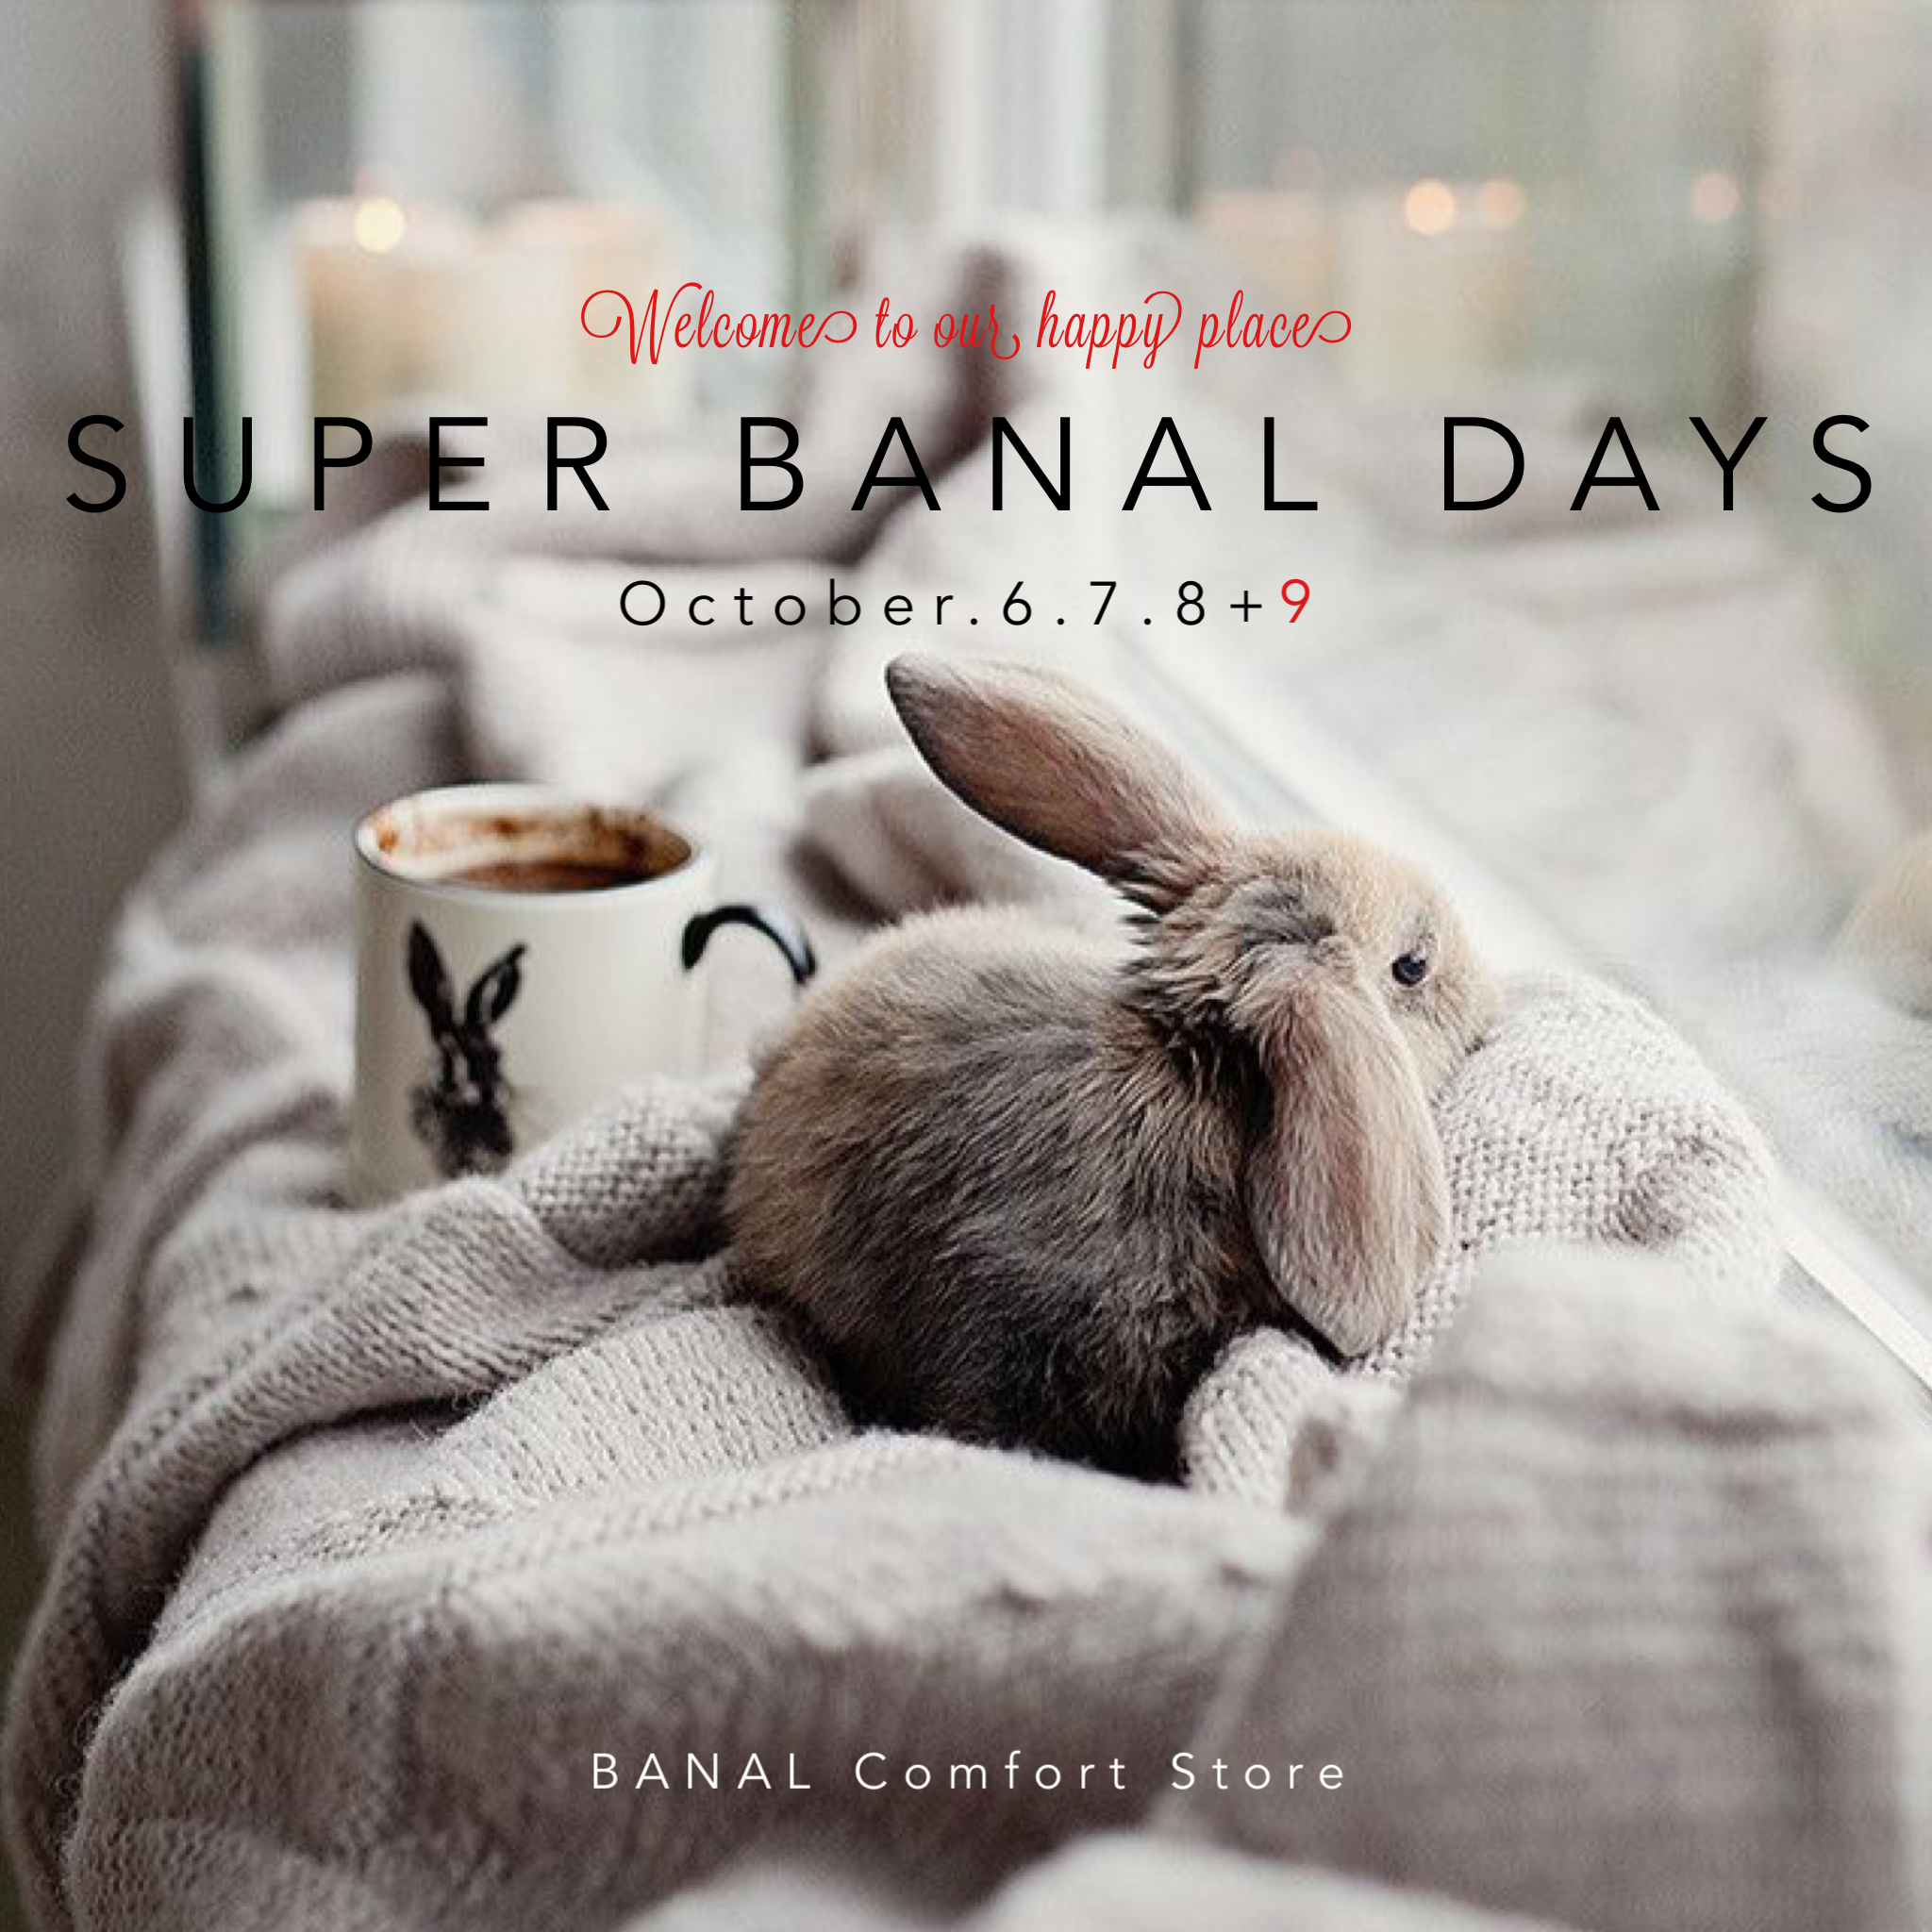 SUPER BANAL DAYS